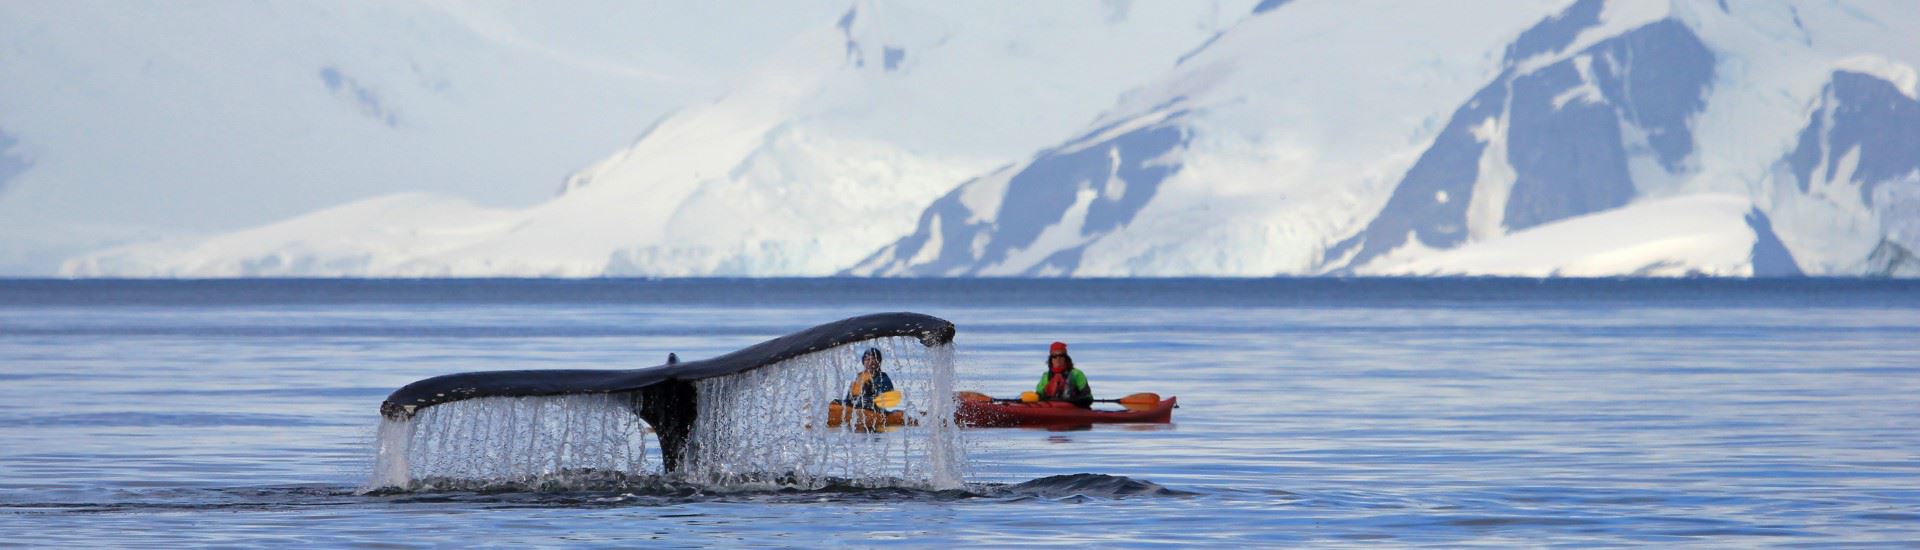 Antarctica - whale breaching kayak